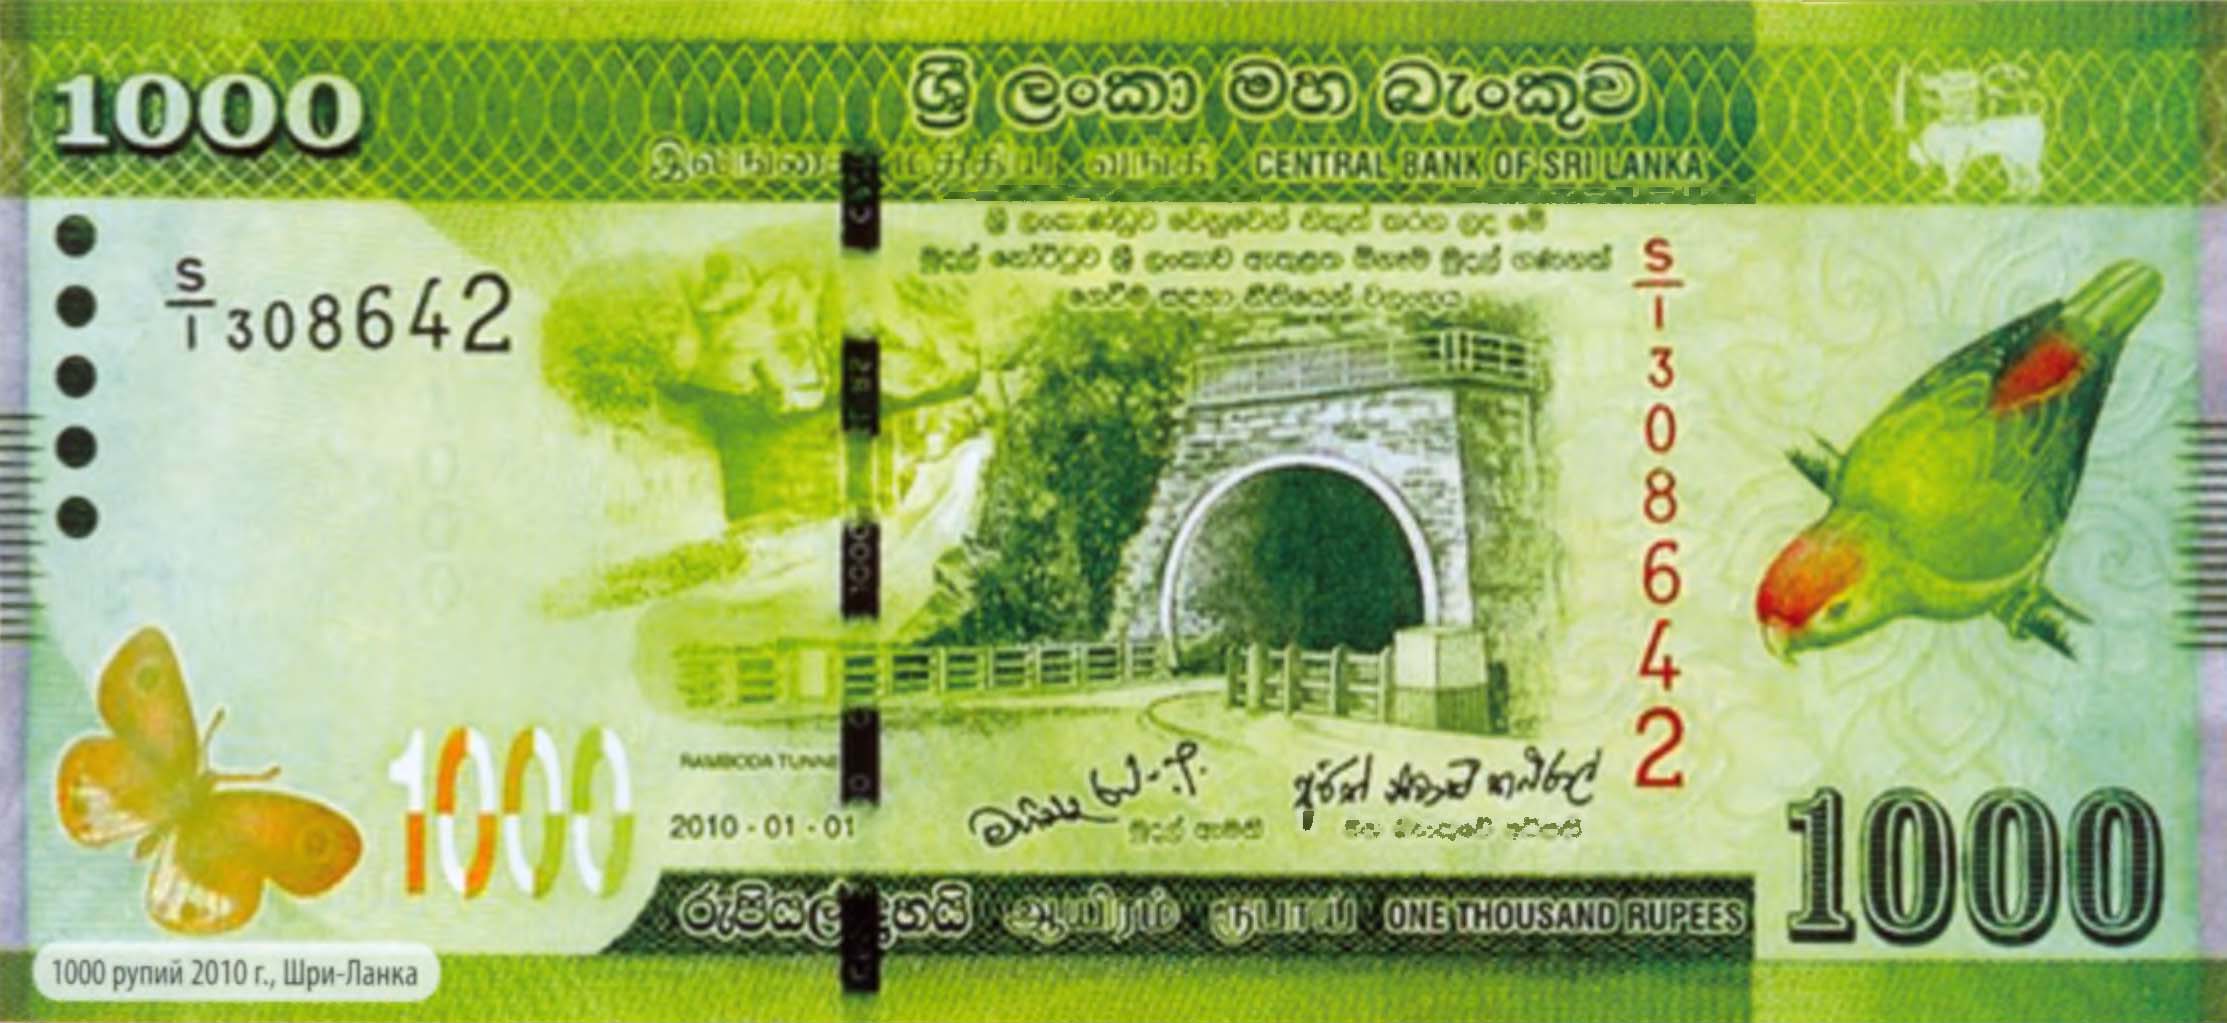 1000 рупий 2010 г., Шри-Ланка.